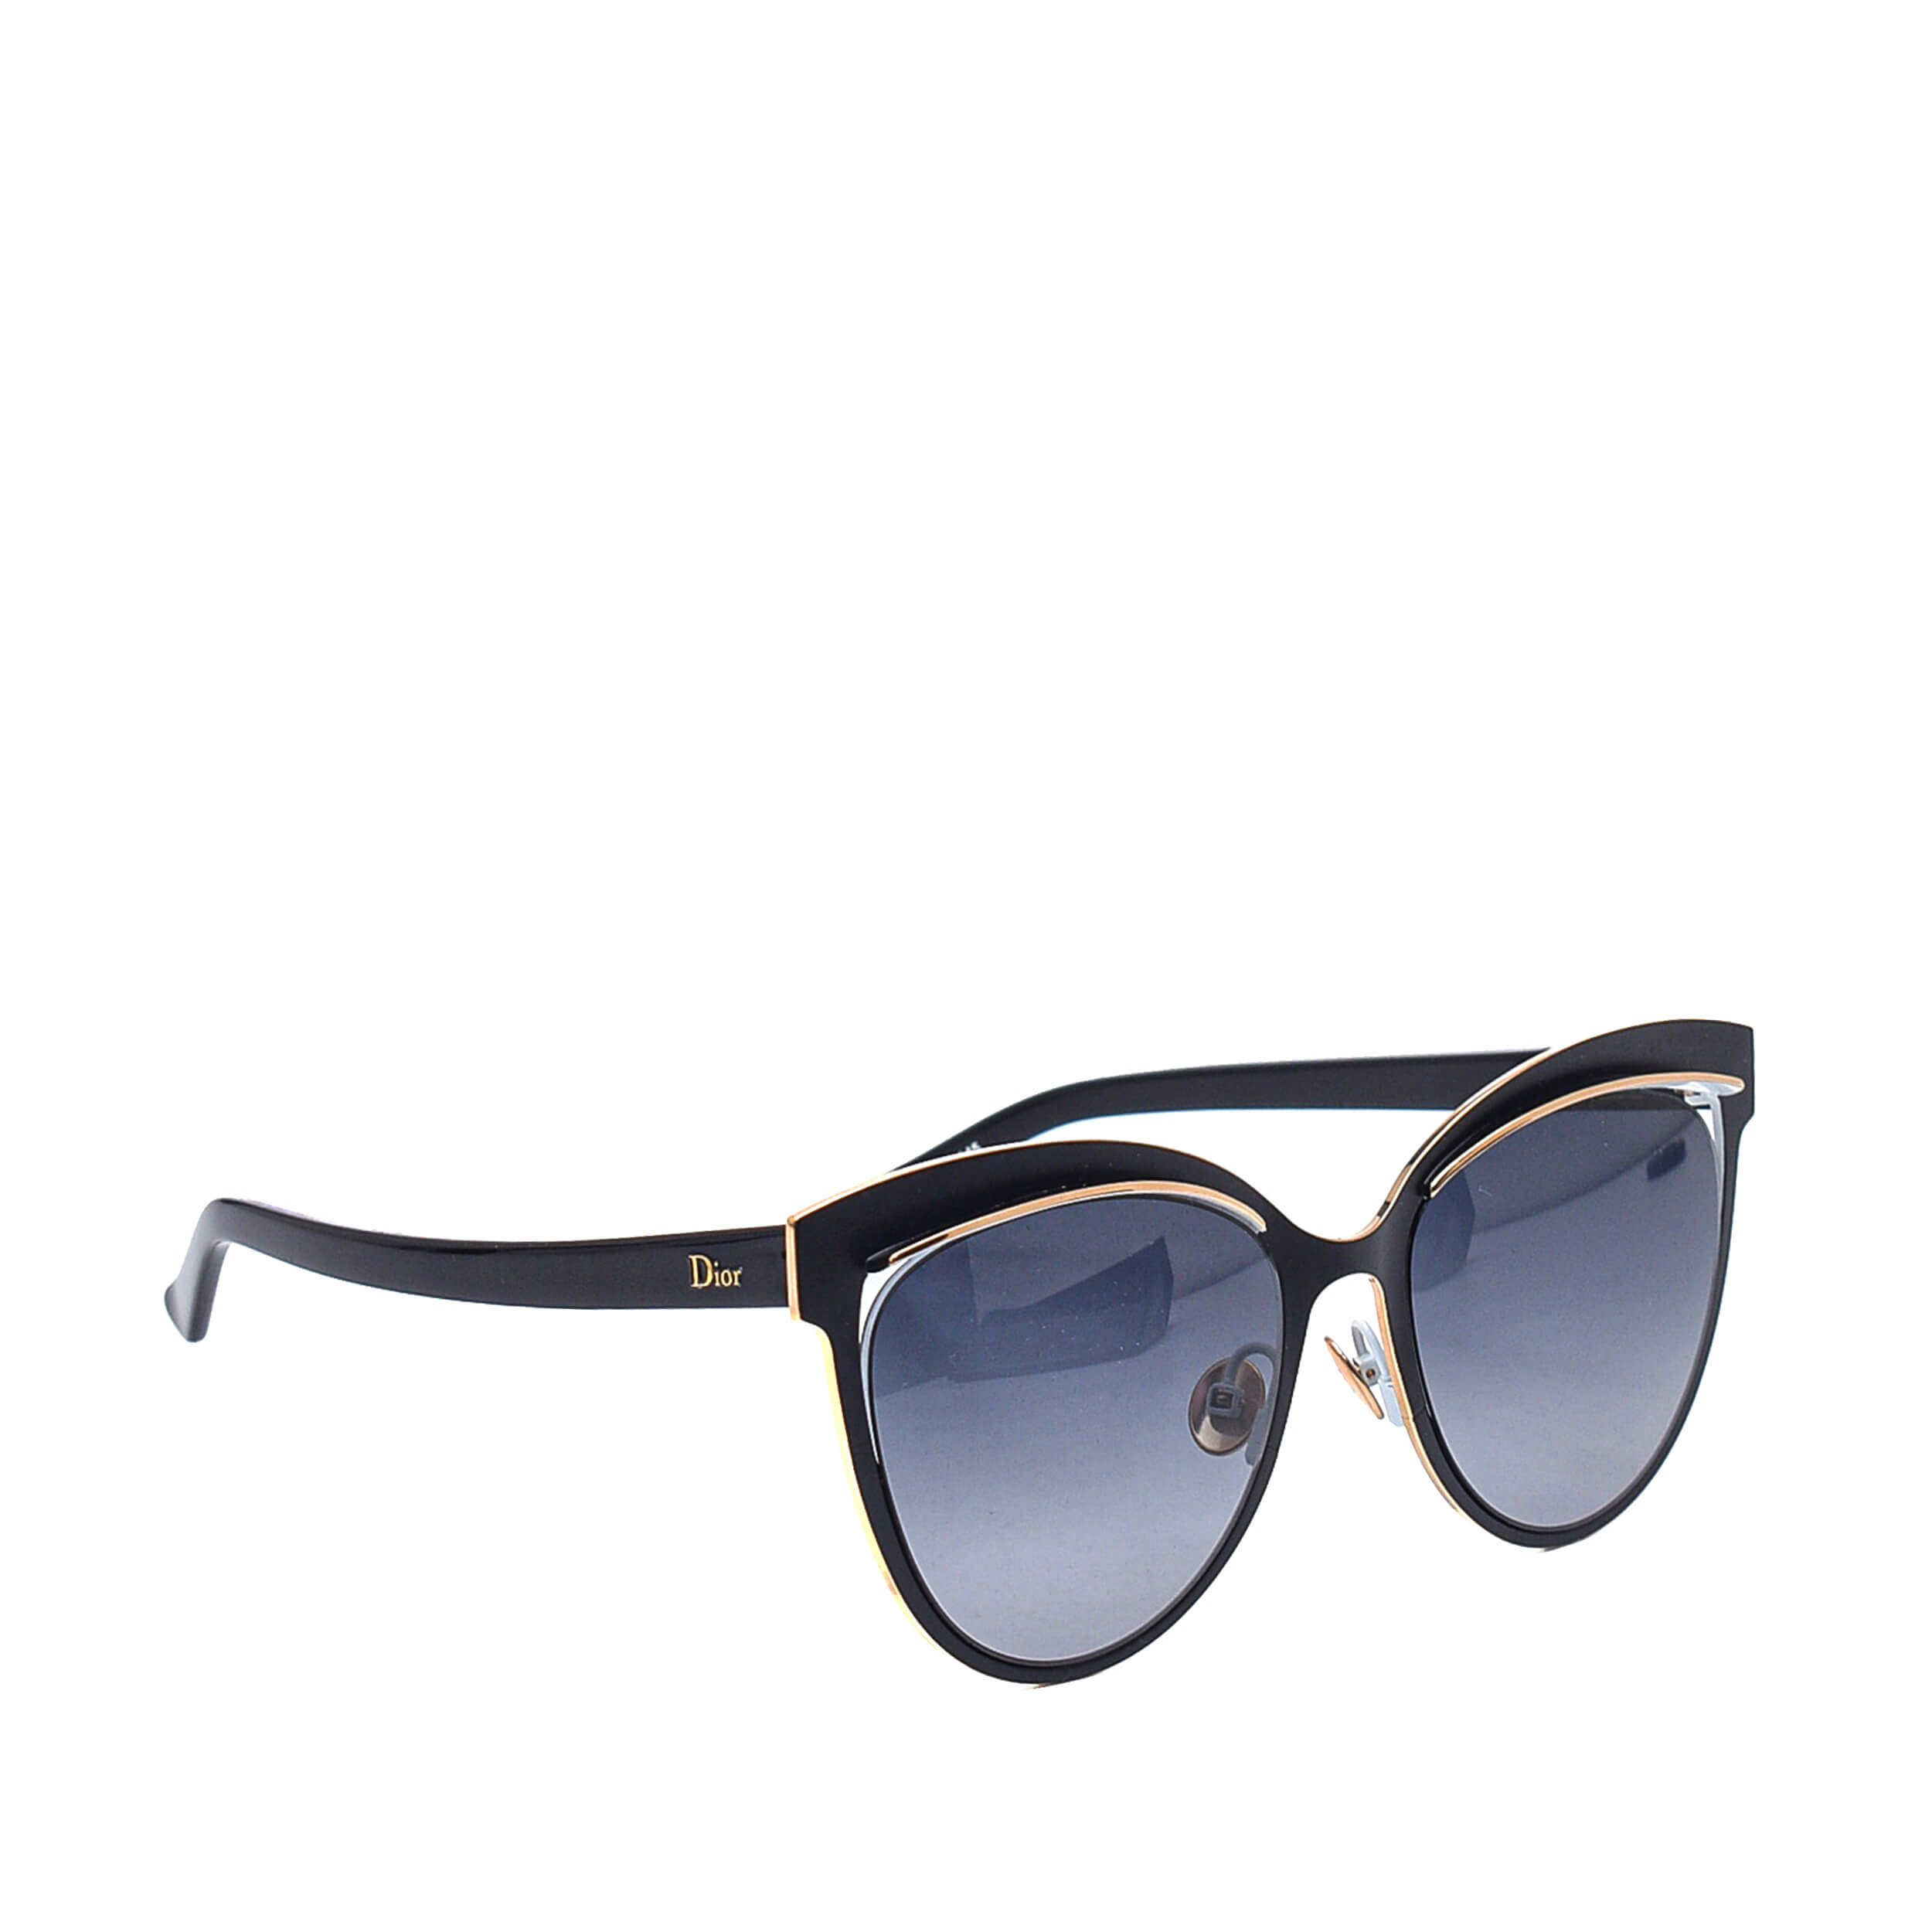 Christian Dior - Black Acetate/Metal Inspired Sunglasses